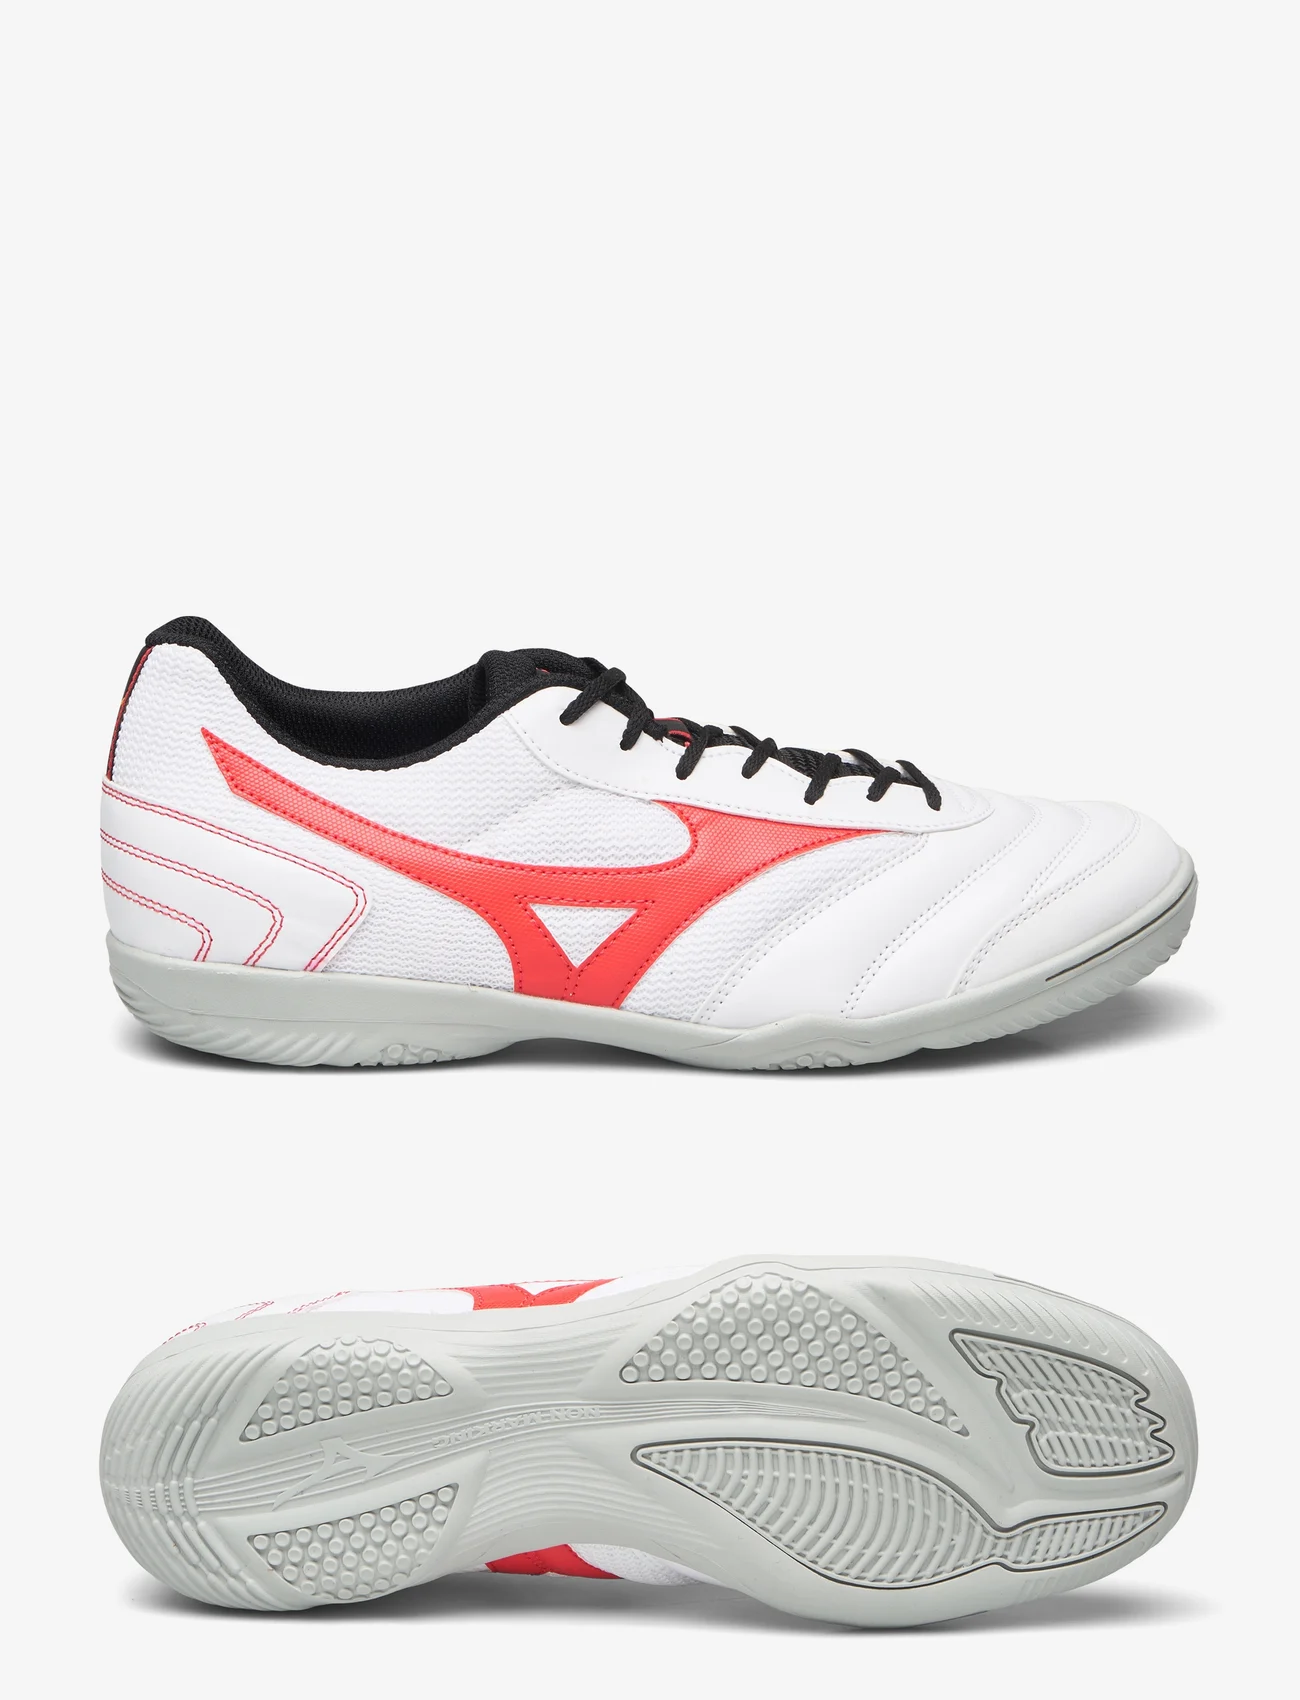 Mizuno - MRL SALA CLUB IN(U) - indoor sports shoes - white/radiant red - 0